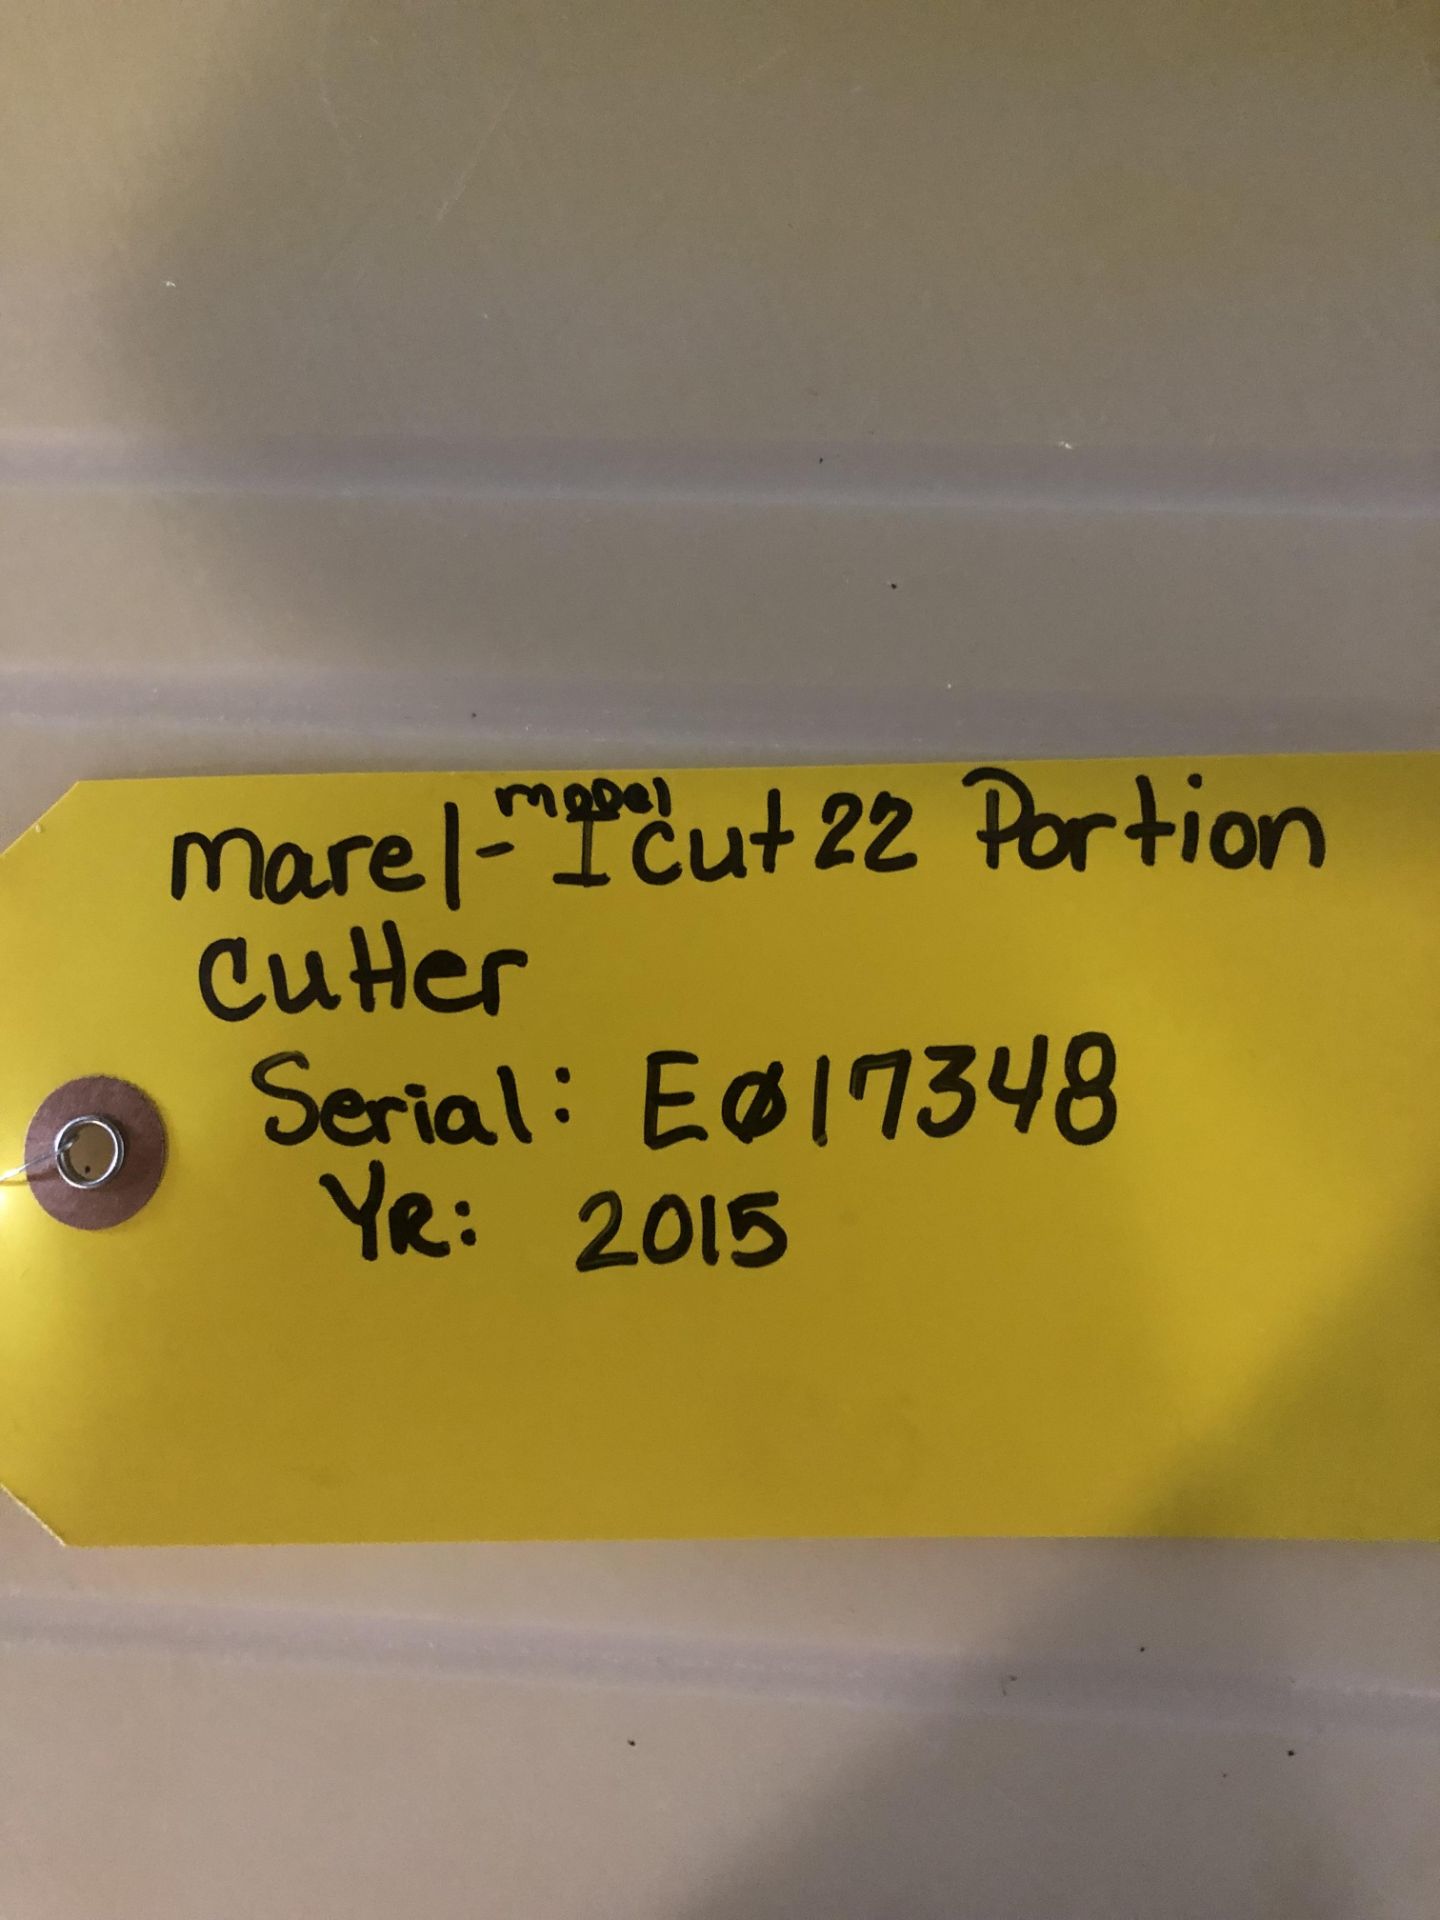 Marel Portion Cutter - Model I-Cut 22 - Serial E17348 - Yr 2015 - Image 6 of 6